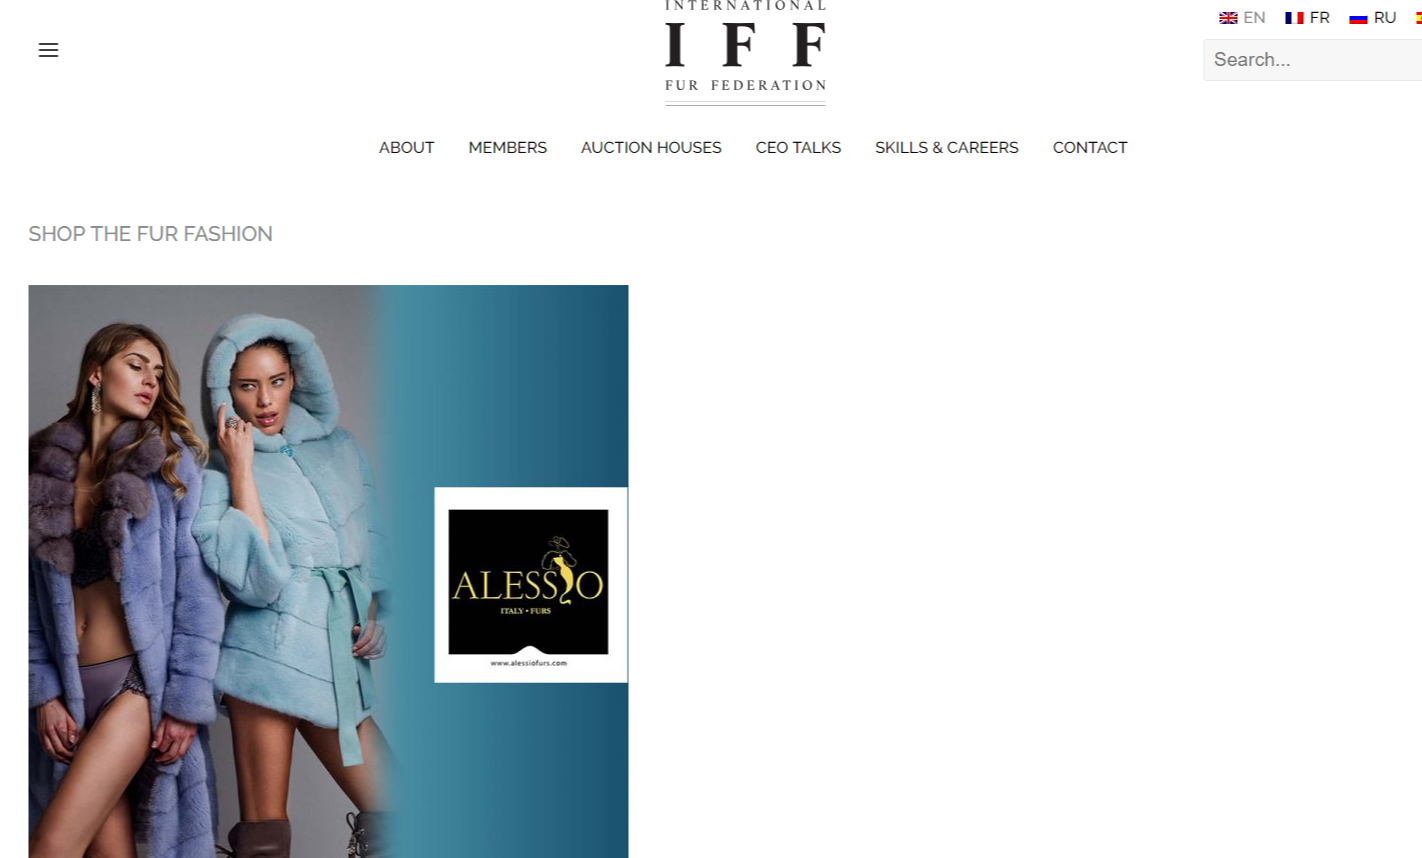 Alessio Furs at Shop the Fur Fashion | Campaign